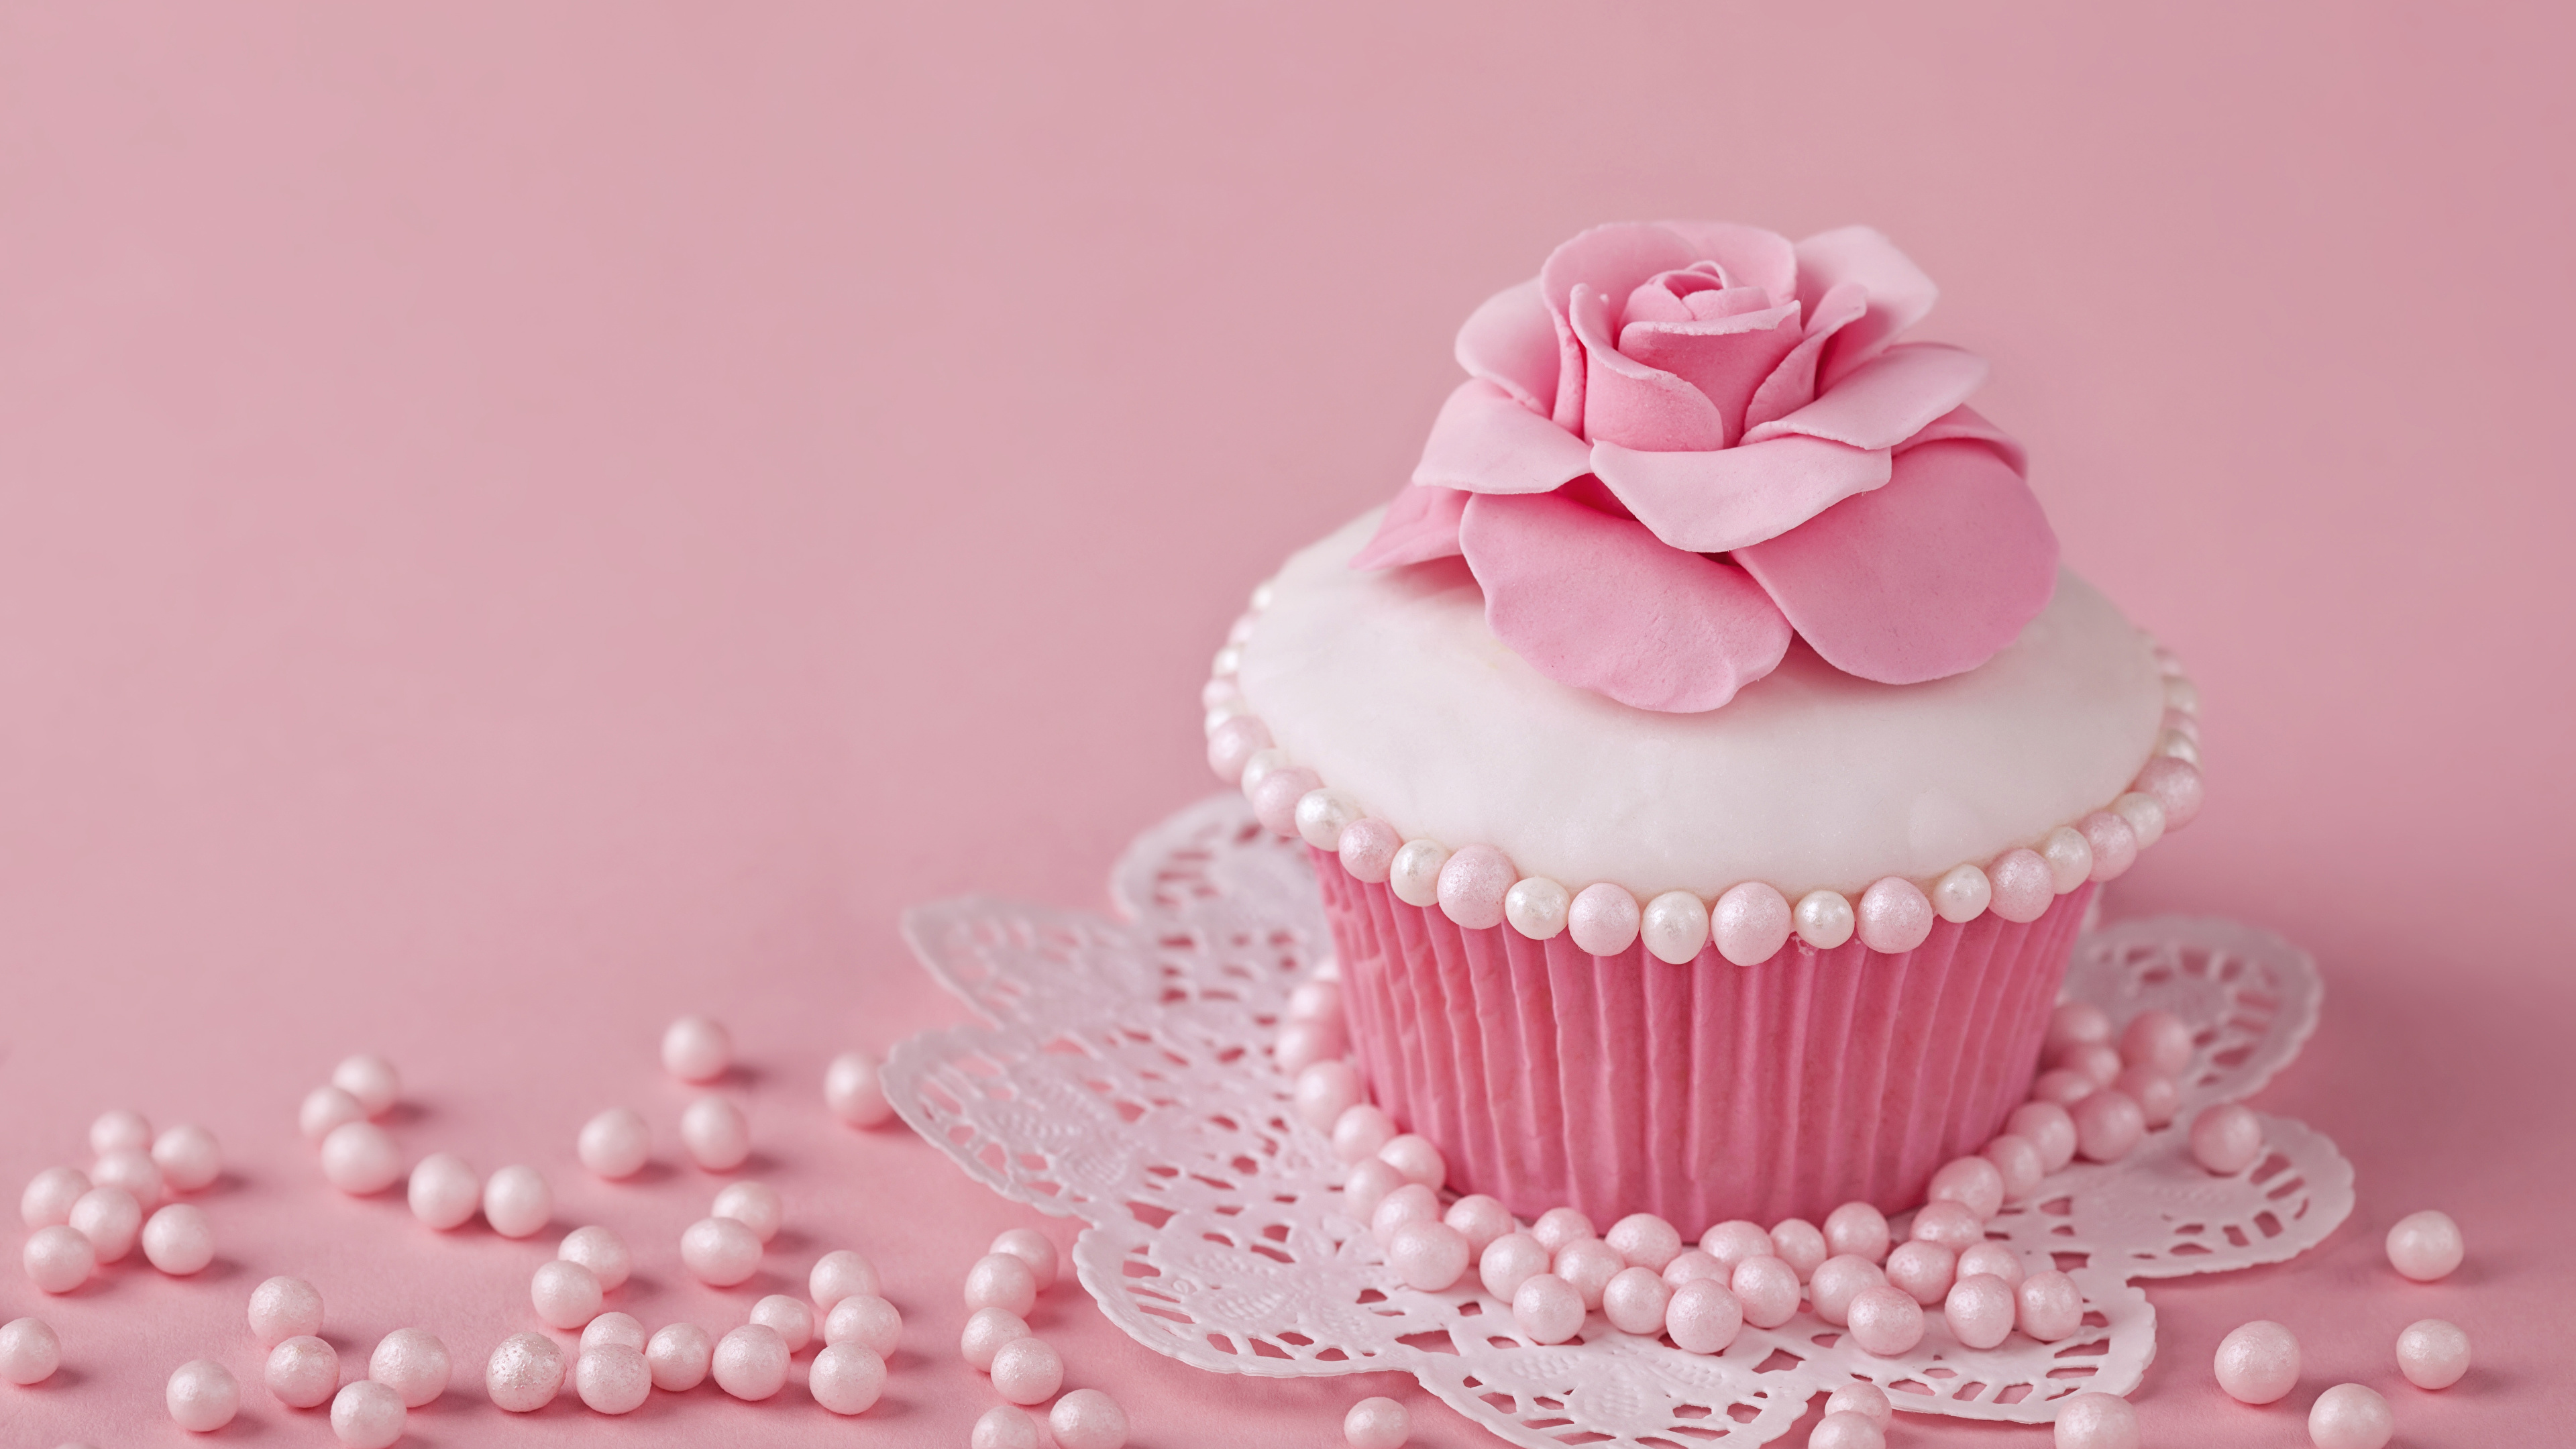 Fonds d'ecran 3840x2160 Cupcake Roses Perle Petit gâteau Rose couleur